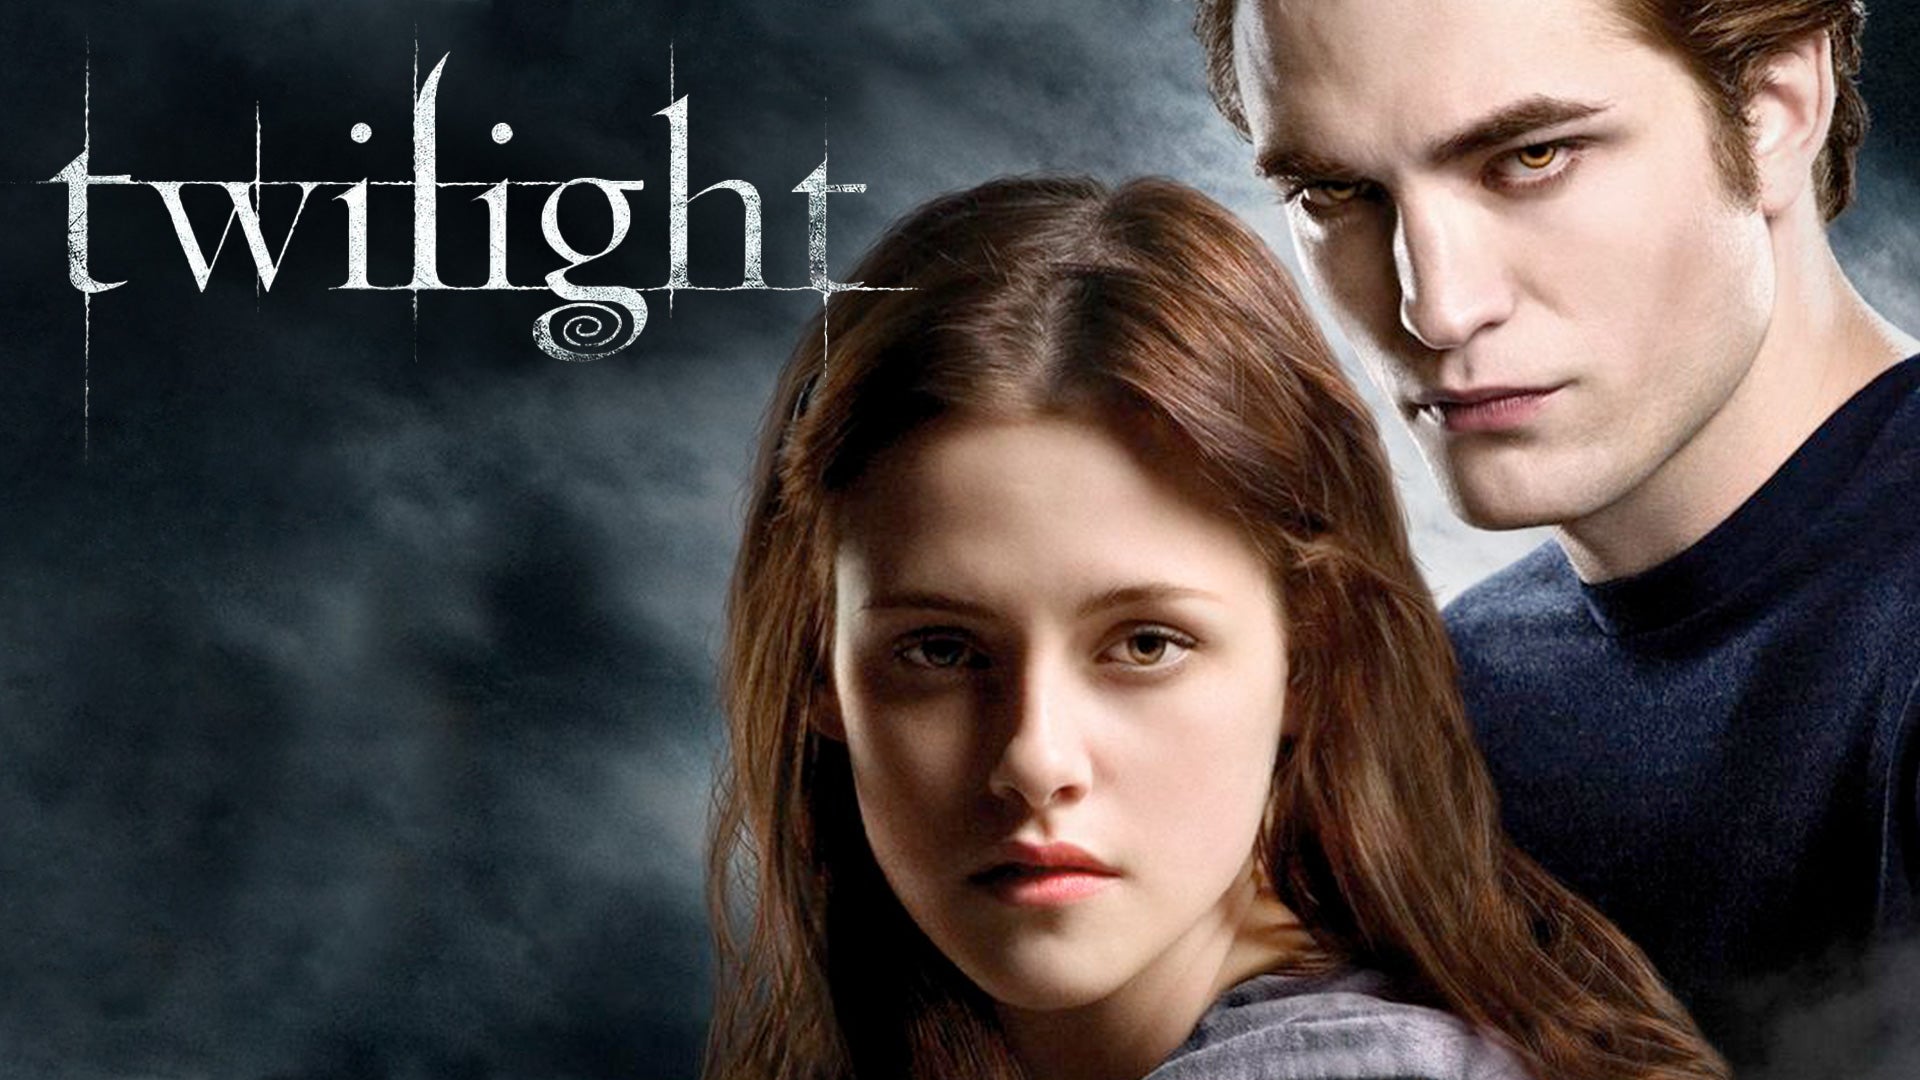 The Twilight Saga: 5-Movie Collection